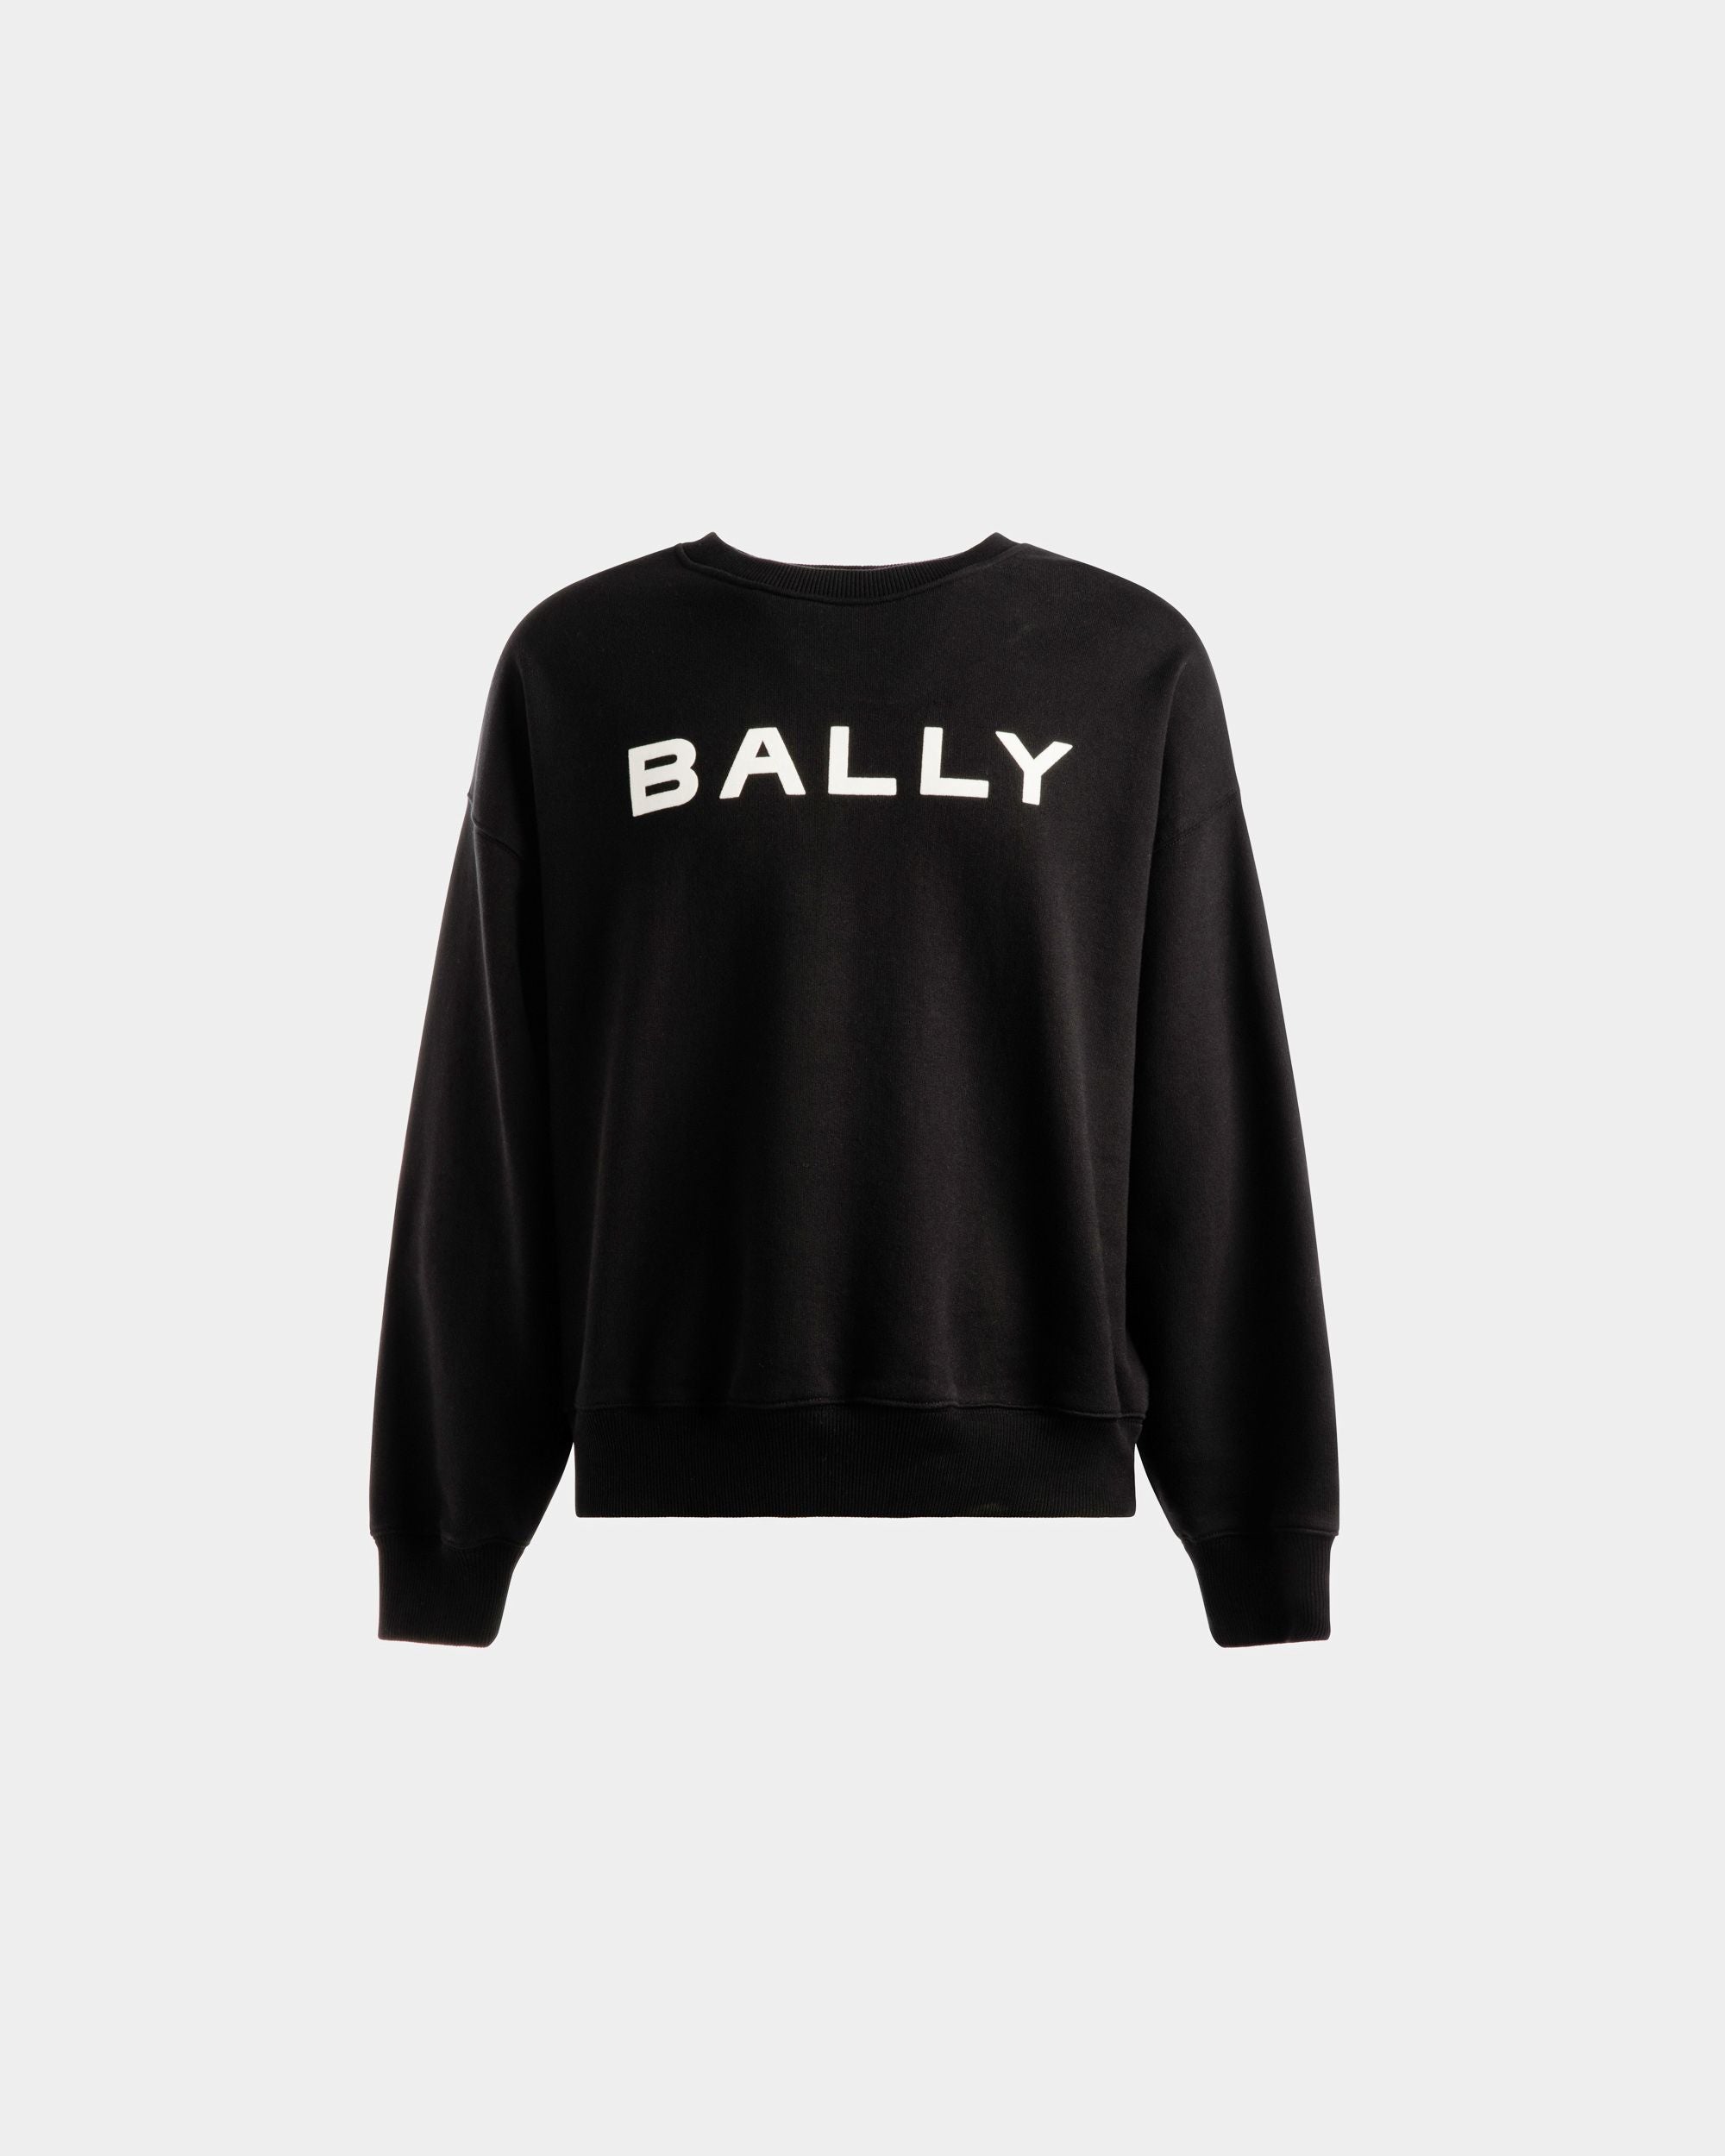 Logo Sweatshirt | Men's Sweatshirt | Black Cotton | Bally | Still Life Front